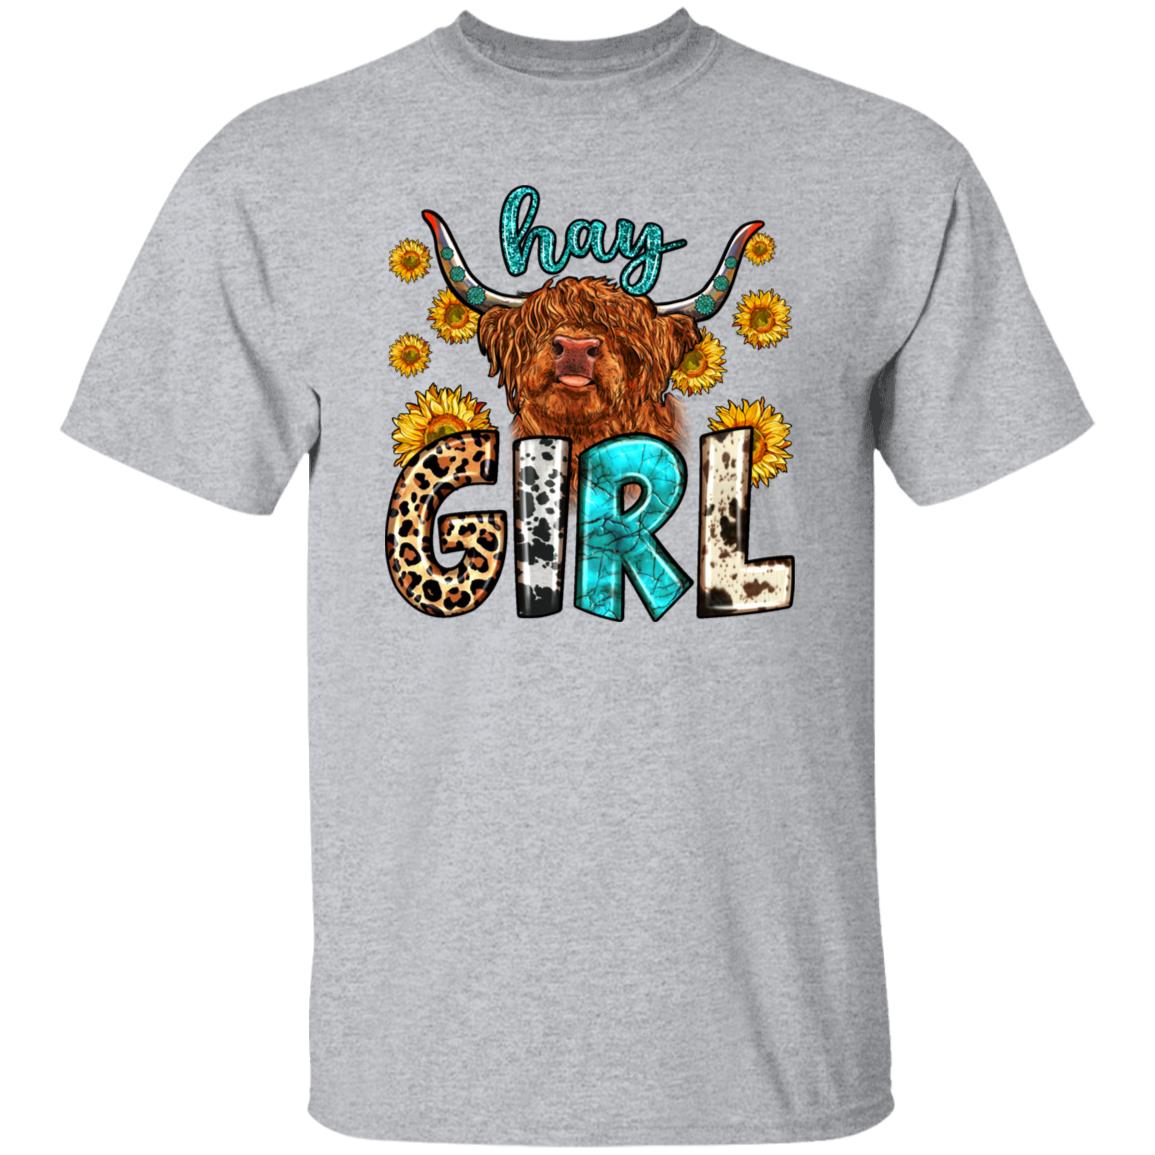 Hay girl T-Shirt gift Western Sunflower highland cow Texas girl Unisex tee Sand White Sport Grey-Family-Gift-Planet